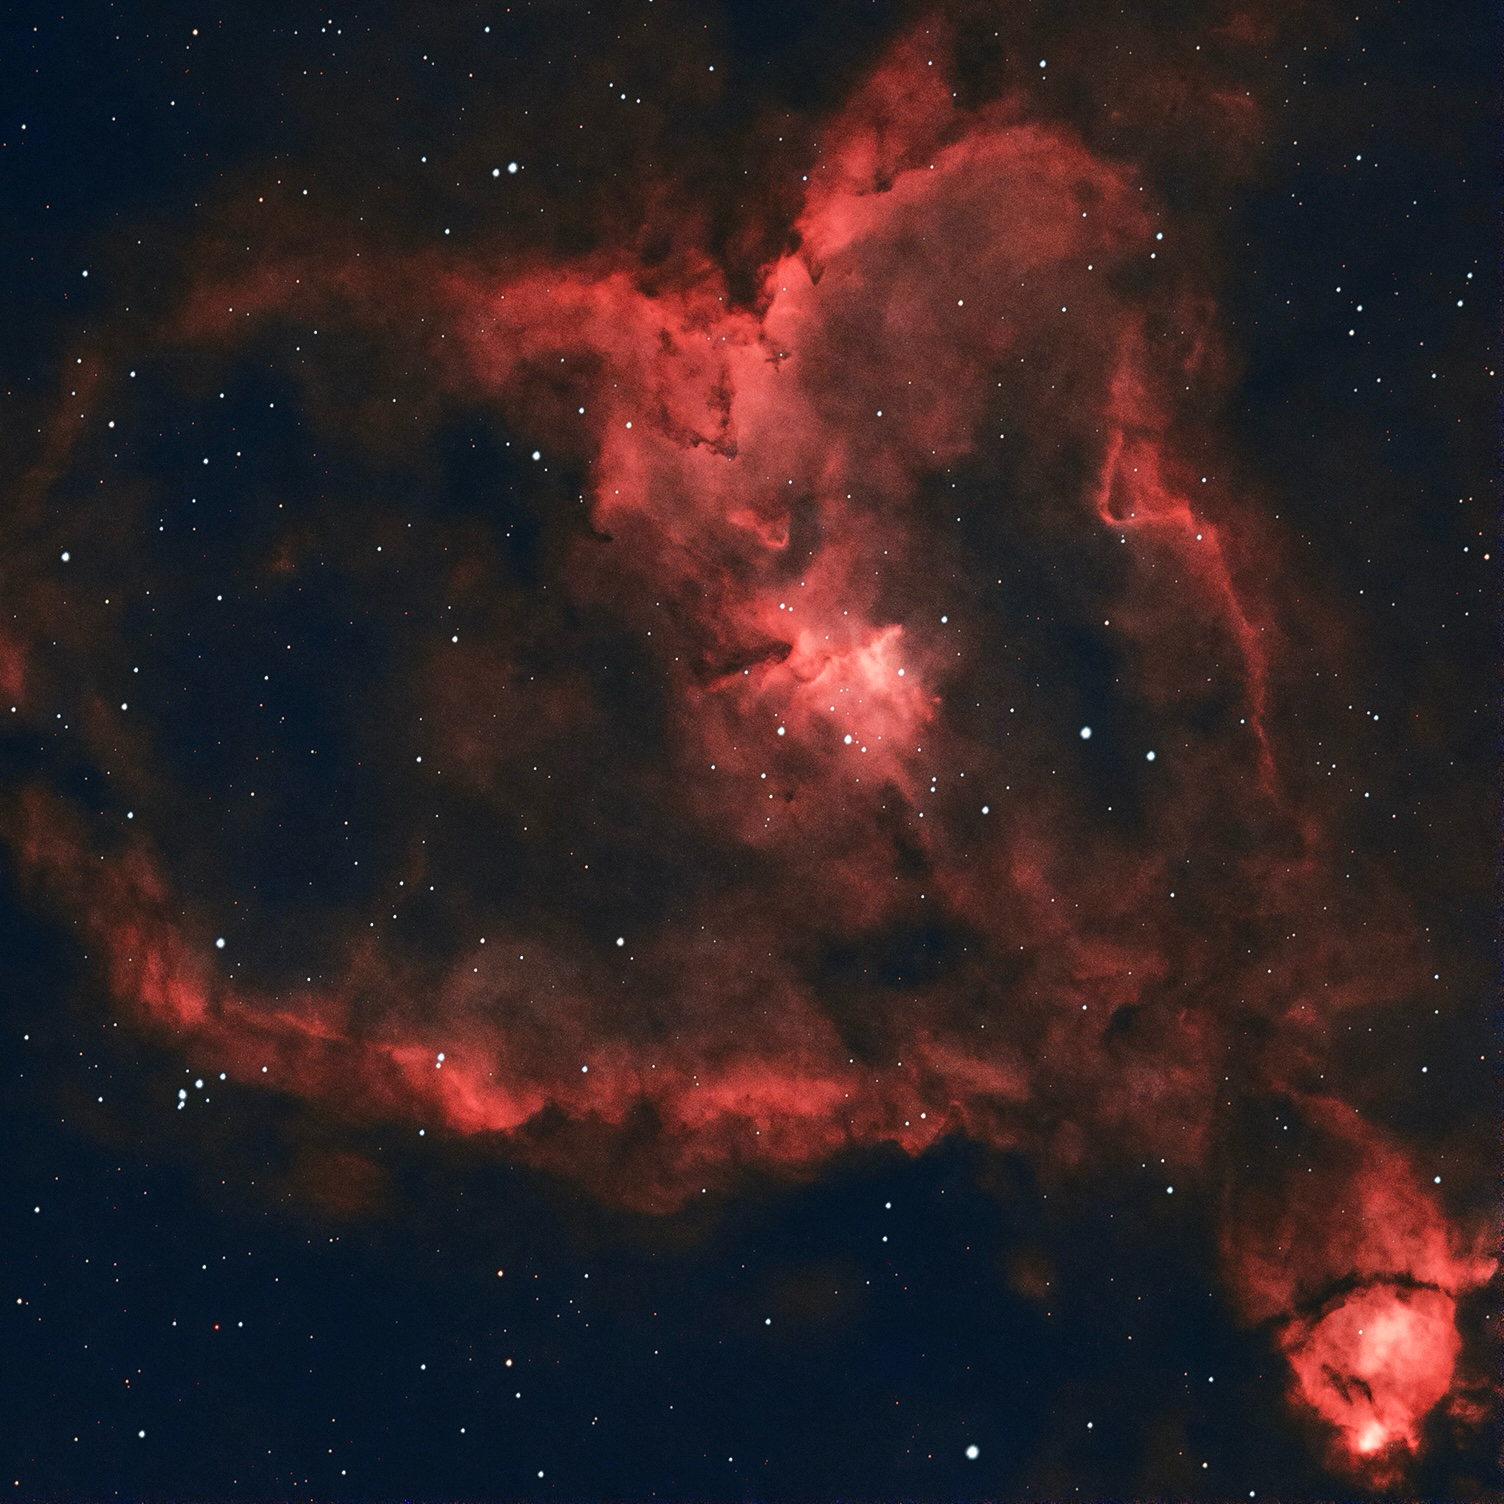 red heart shaped nebula with many stars